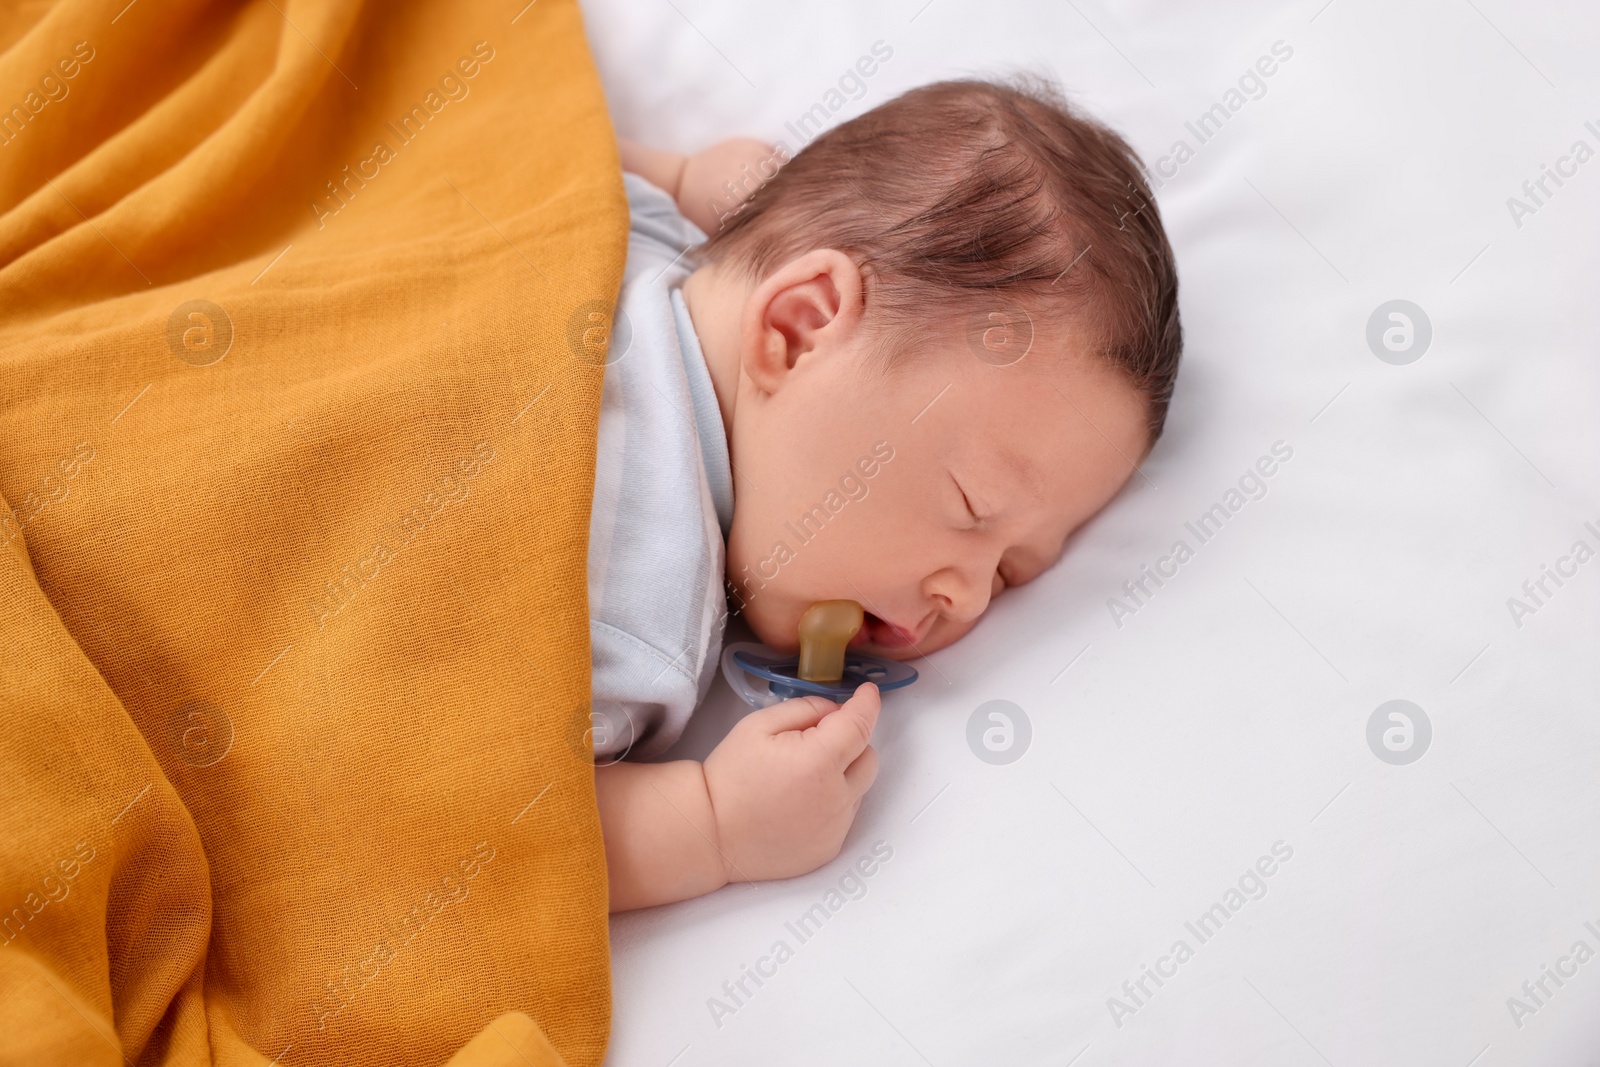 Photo of Cute newborn baby with pacifier sleeping under orange blanket on bed